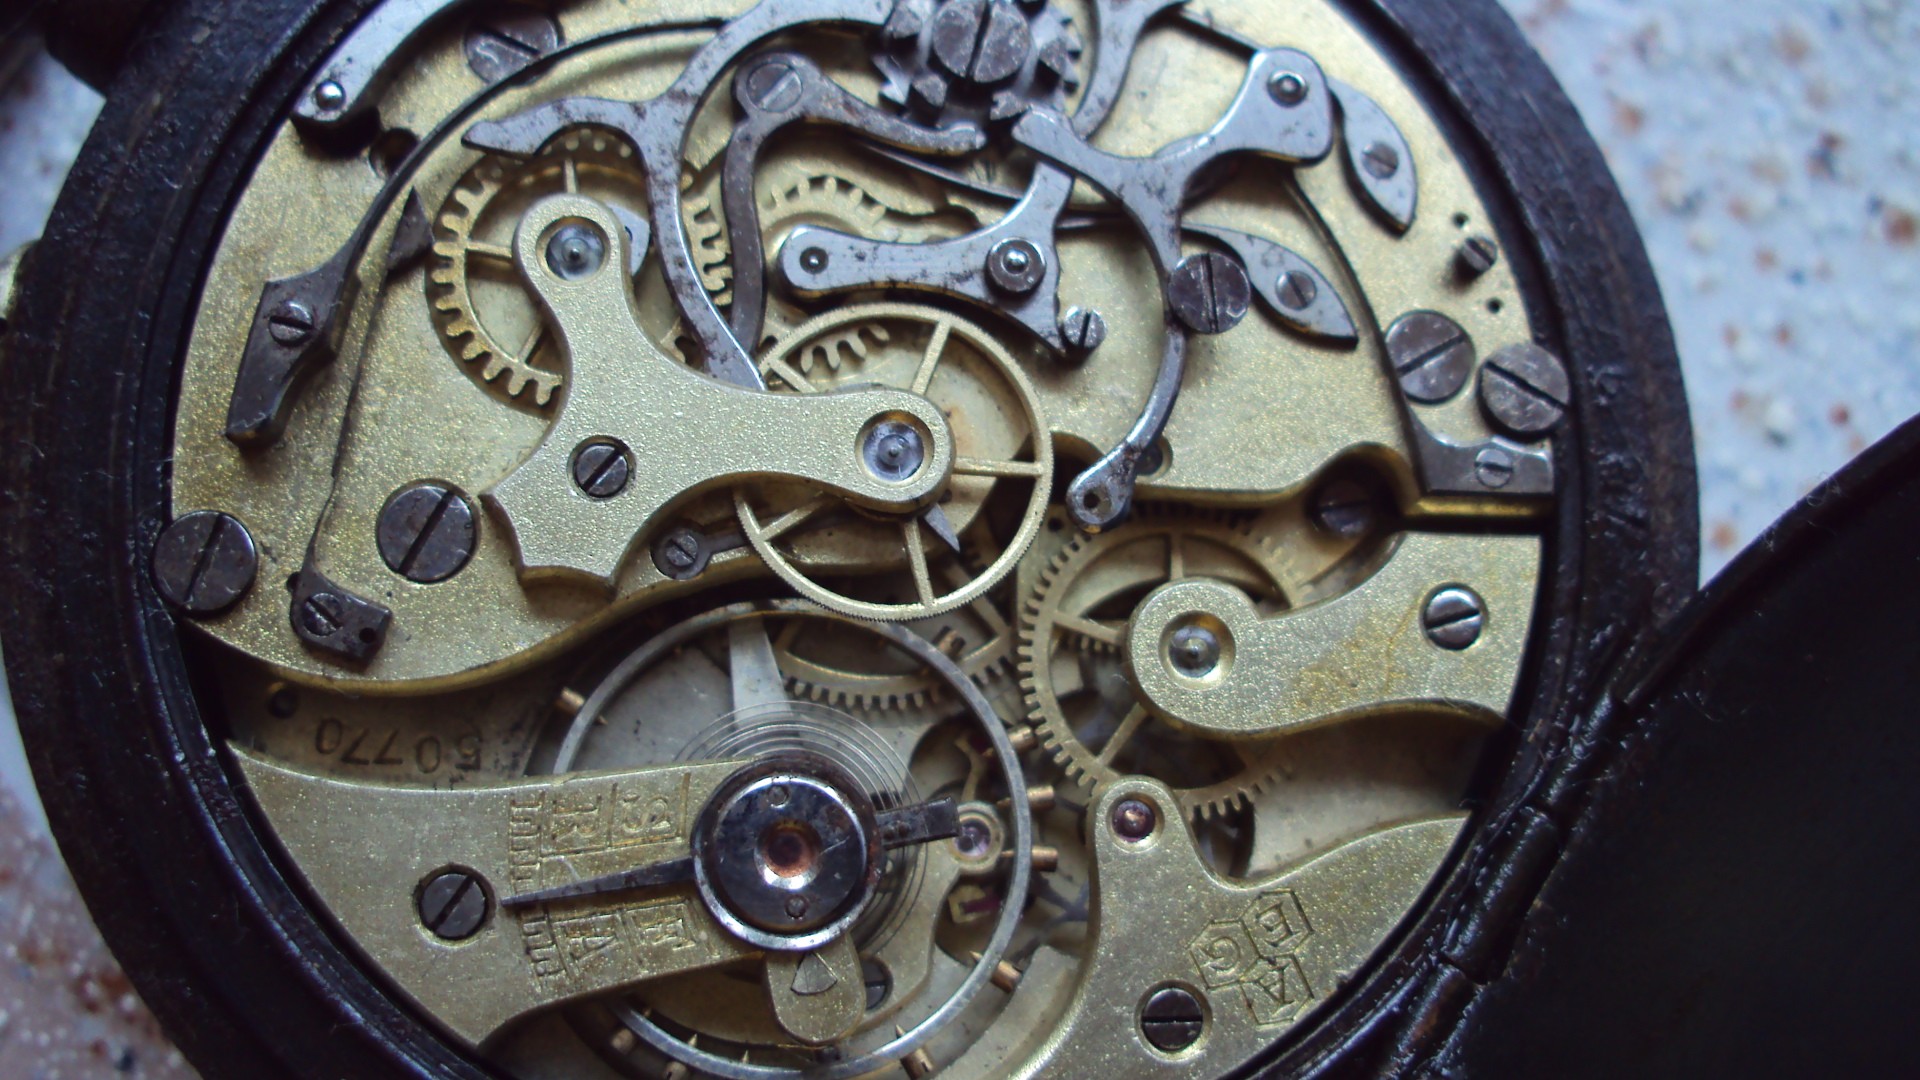 General 1920x1080 clockwork gears metal technology